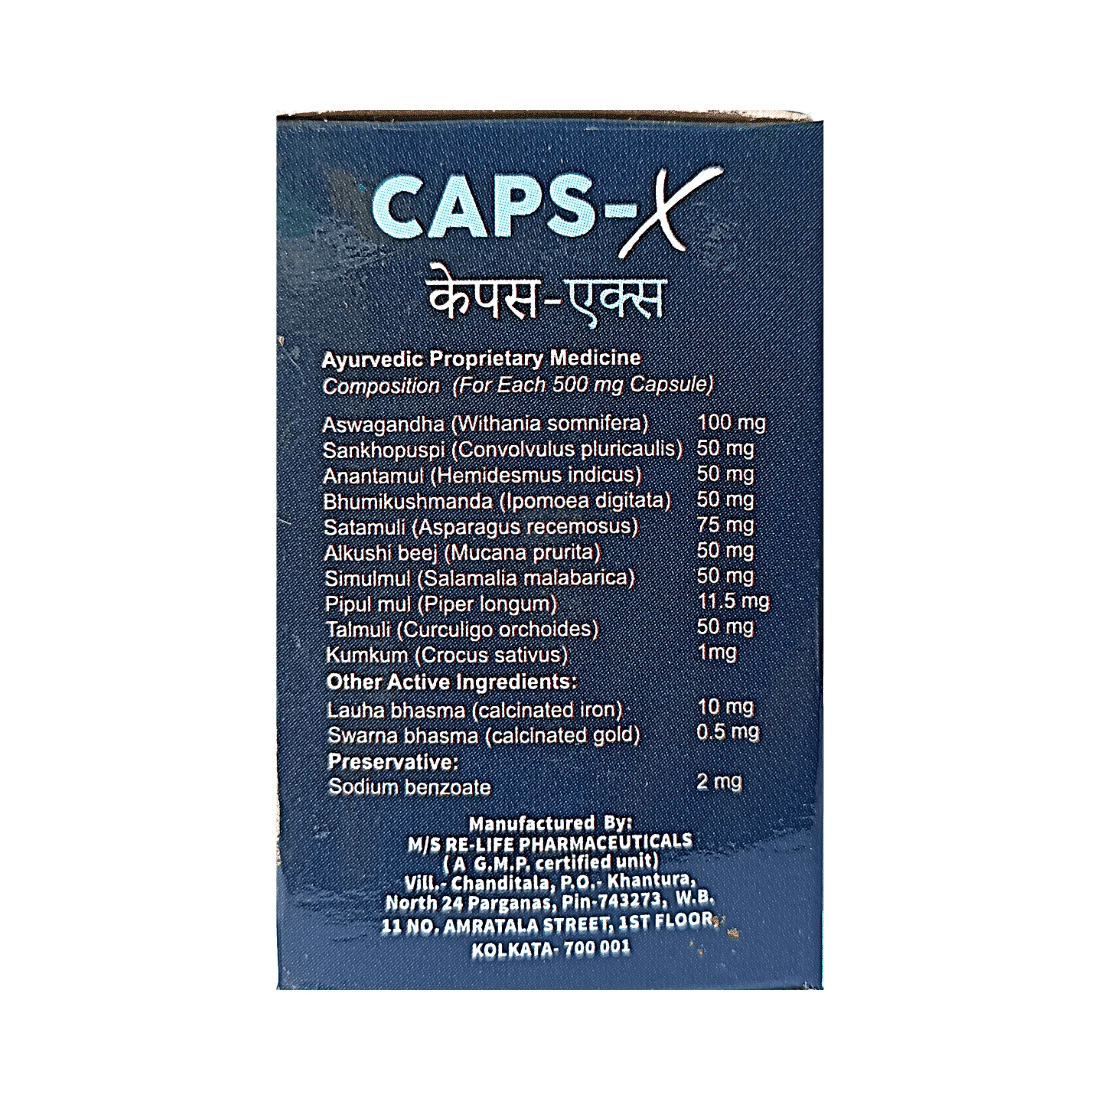 Purchace Now Ayurvedic CAPS-X 15 Capsule For Sexual Debility & Health Rejuvinator.